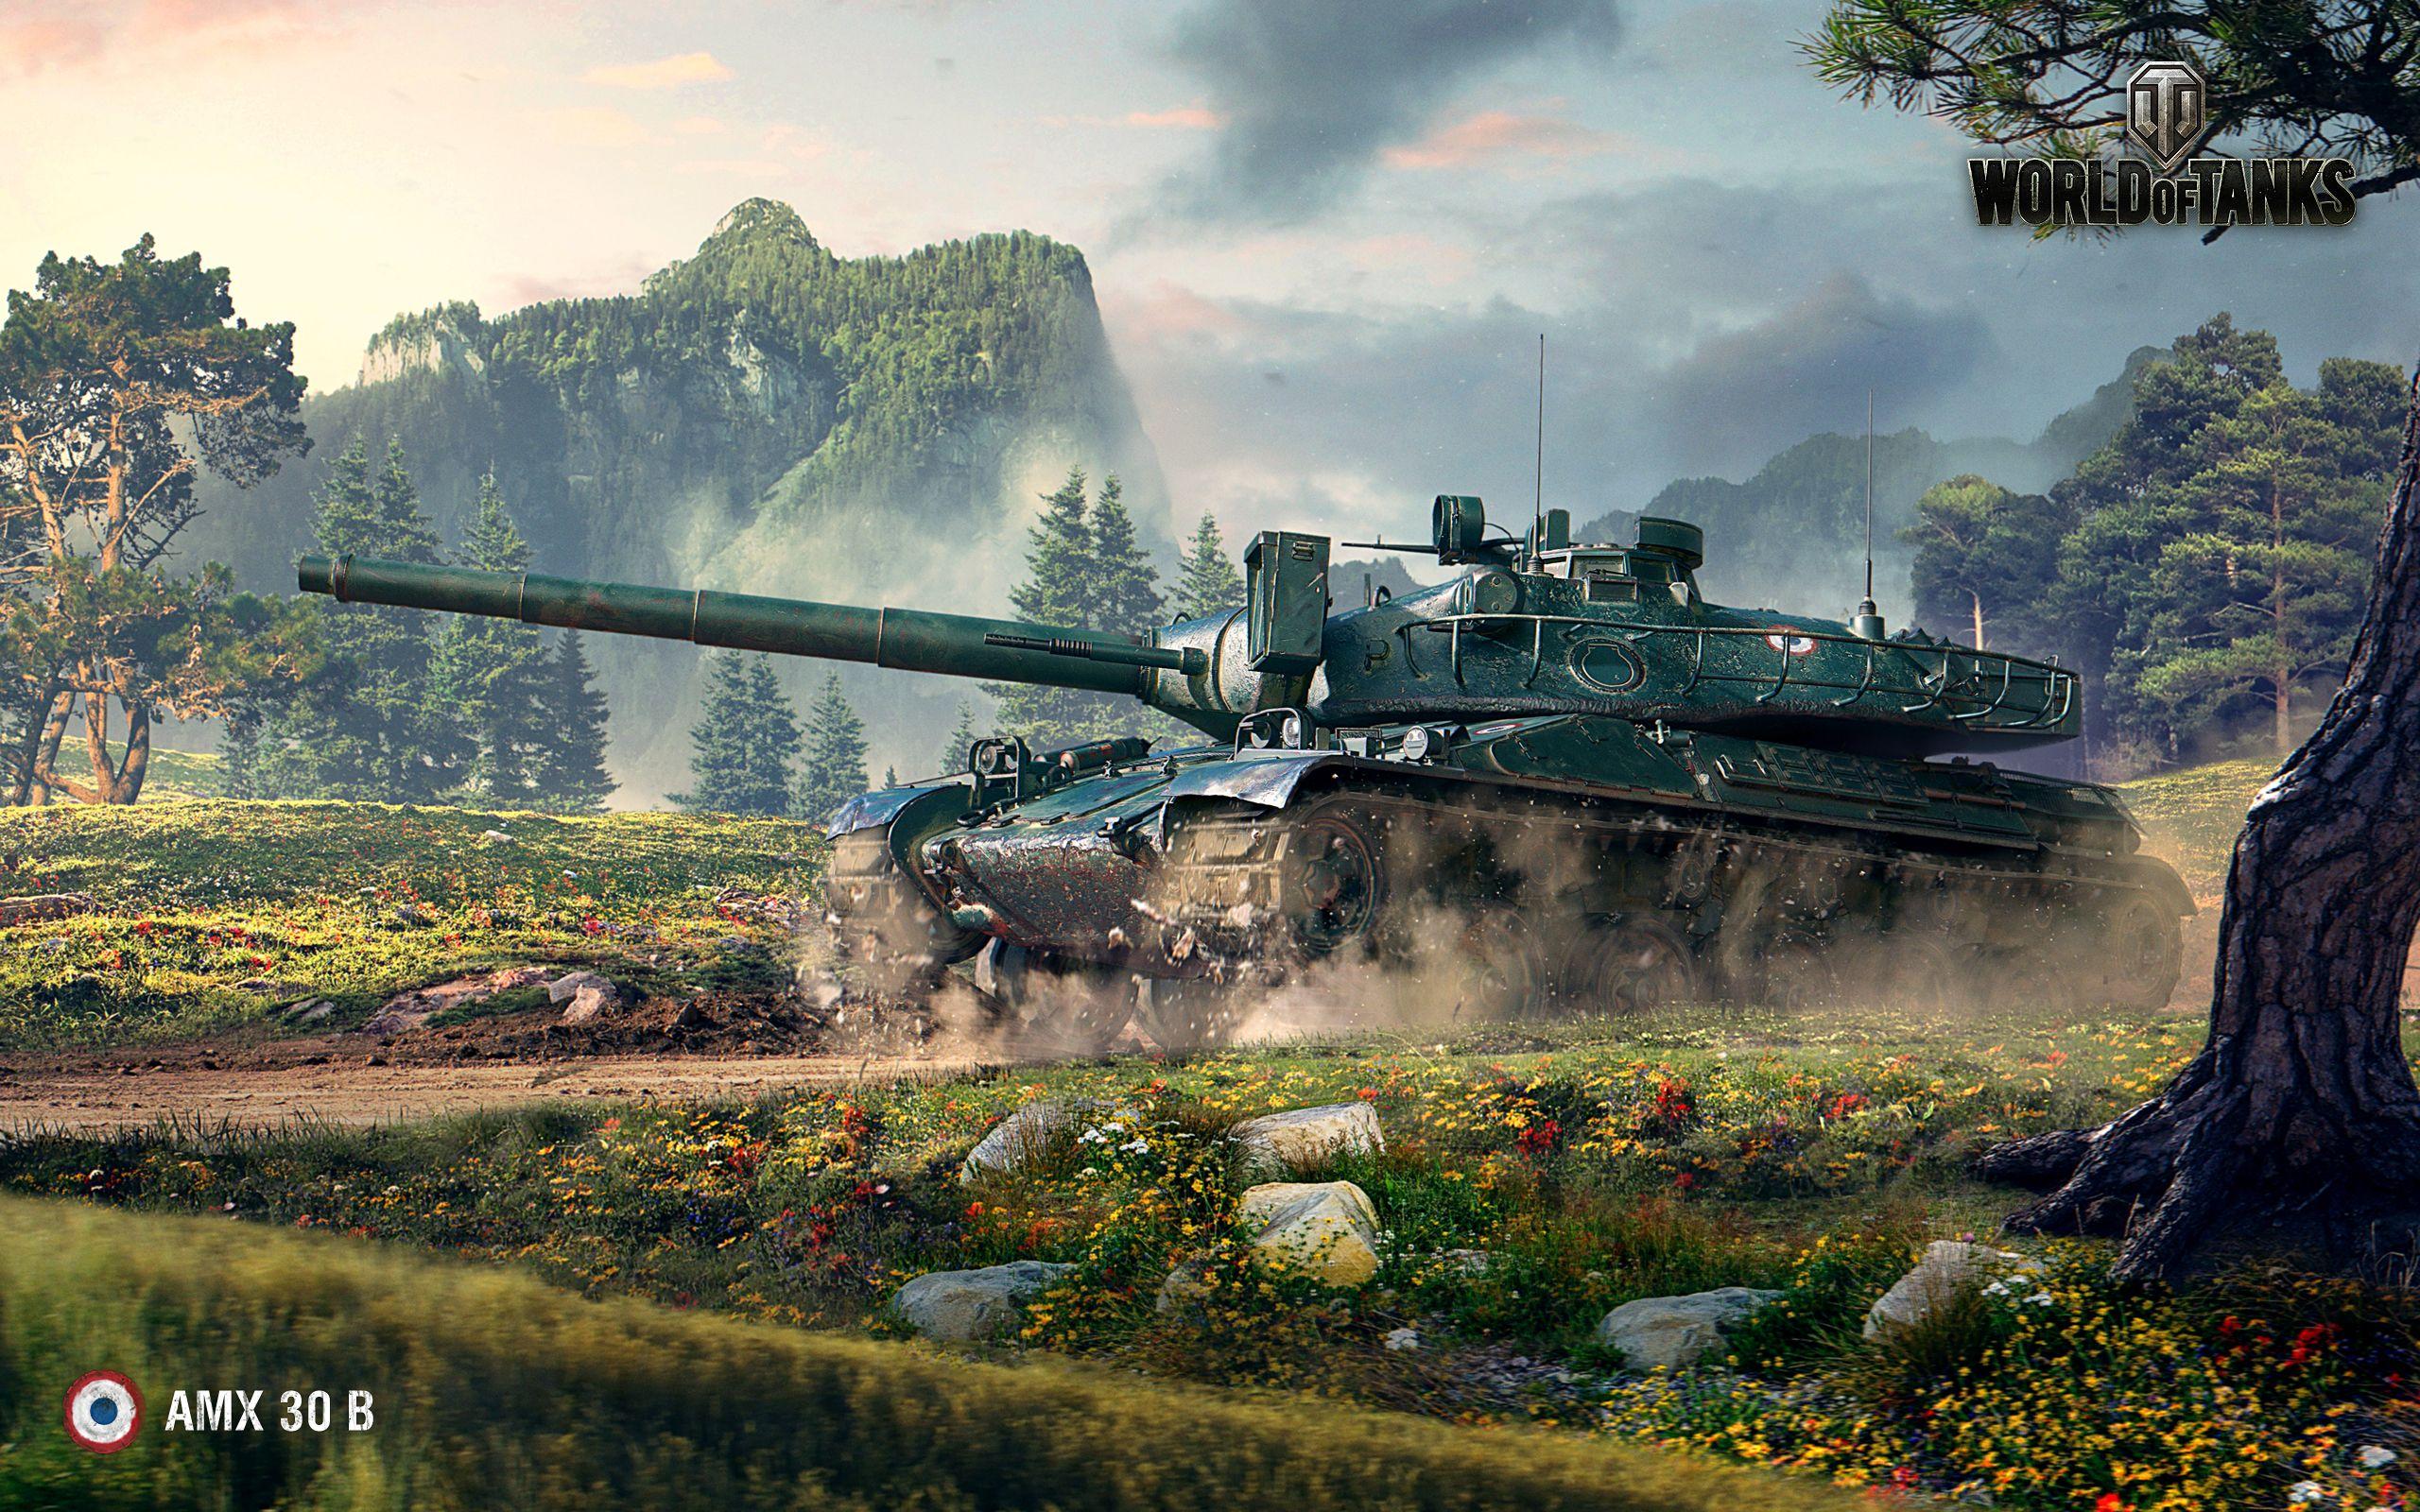 April 2015 Wallpaper: AMX 30 B. Tanks: World of Tanks media, best